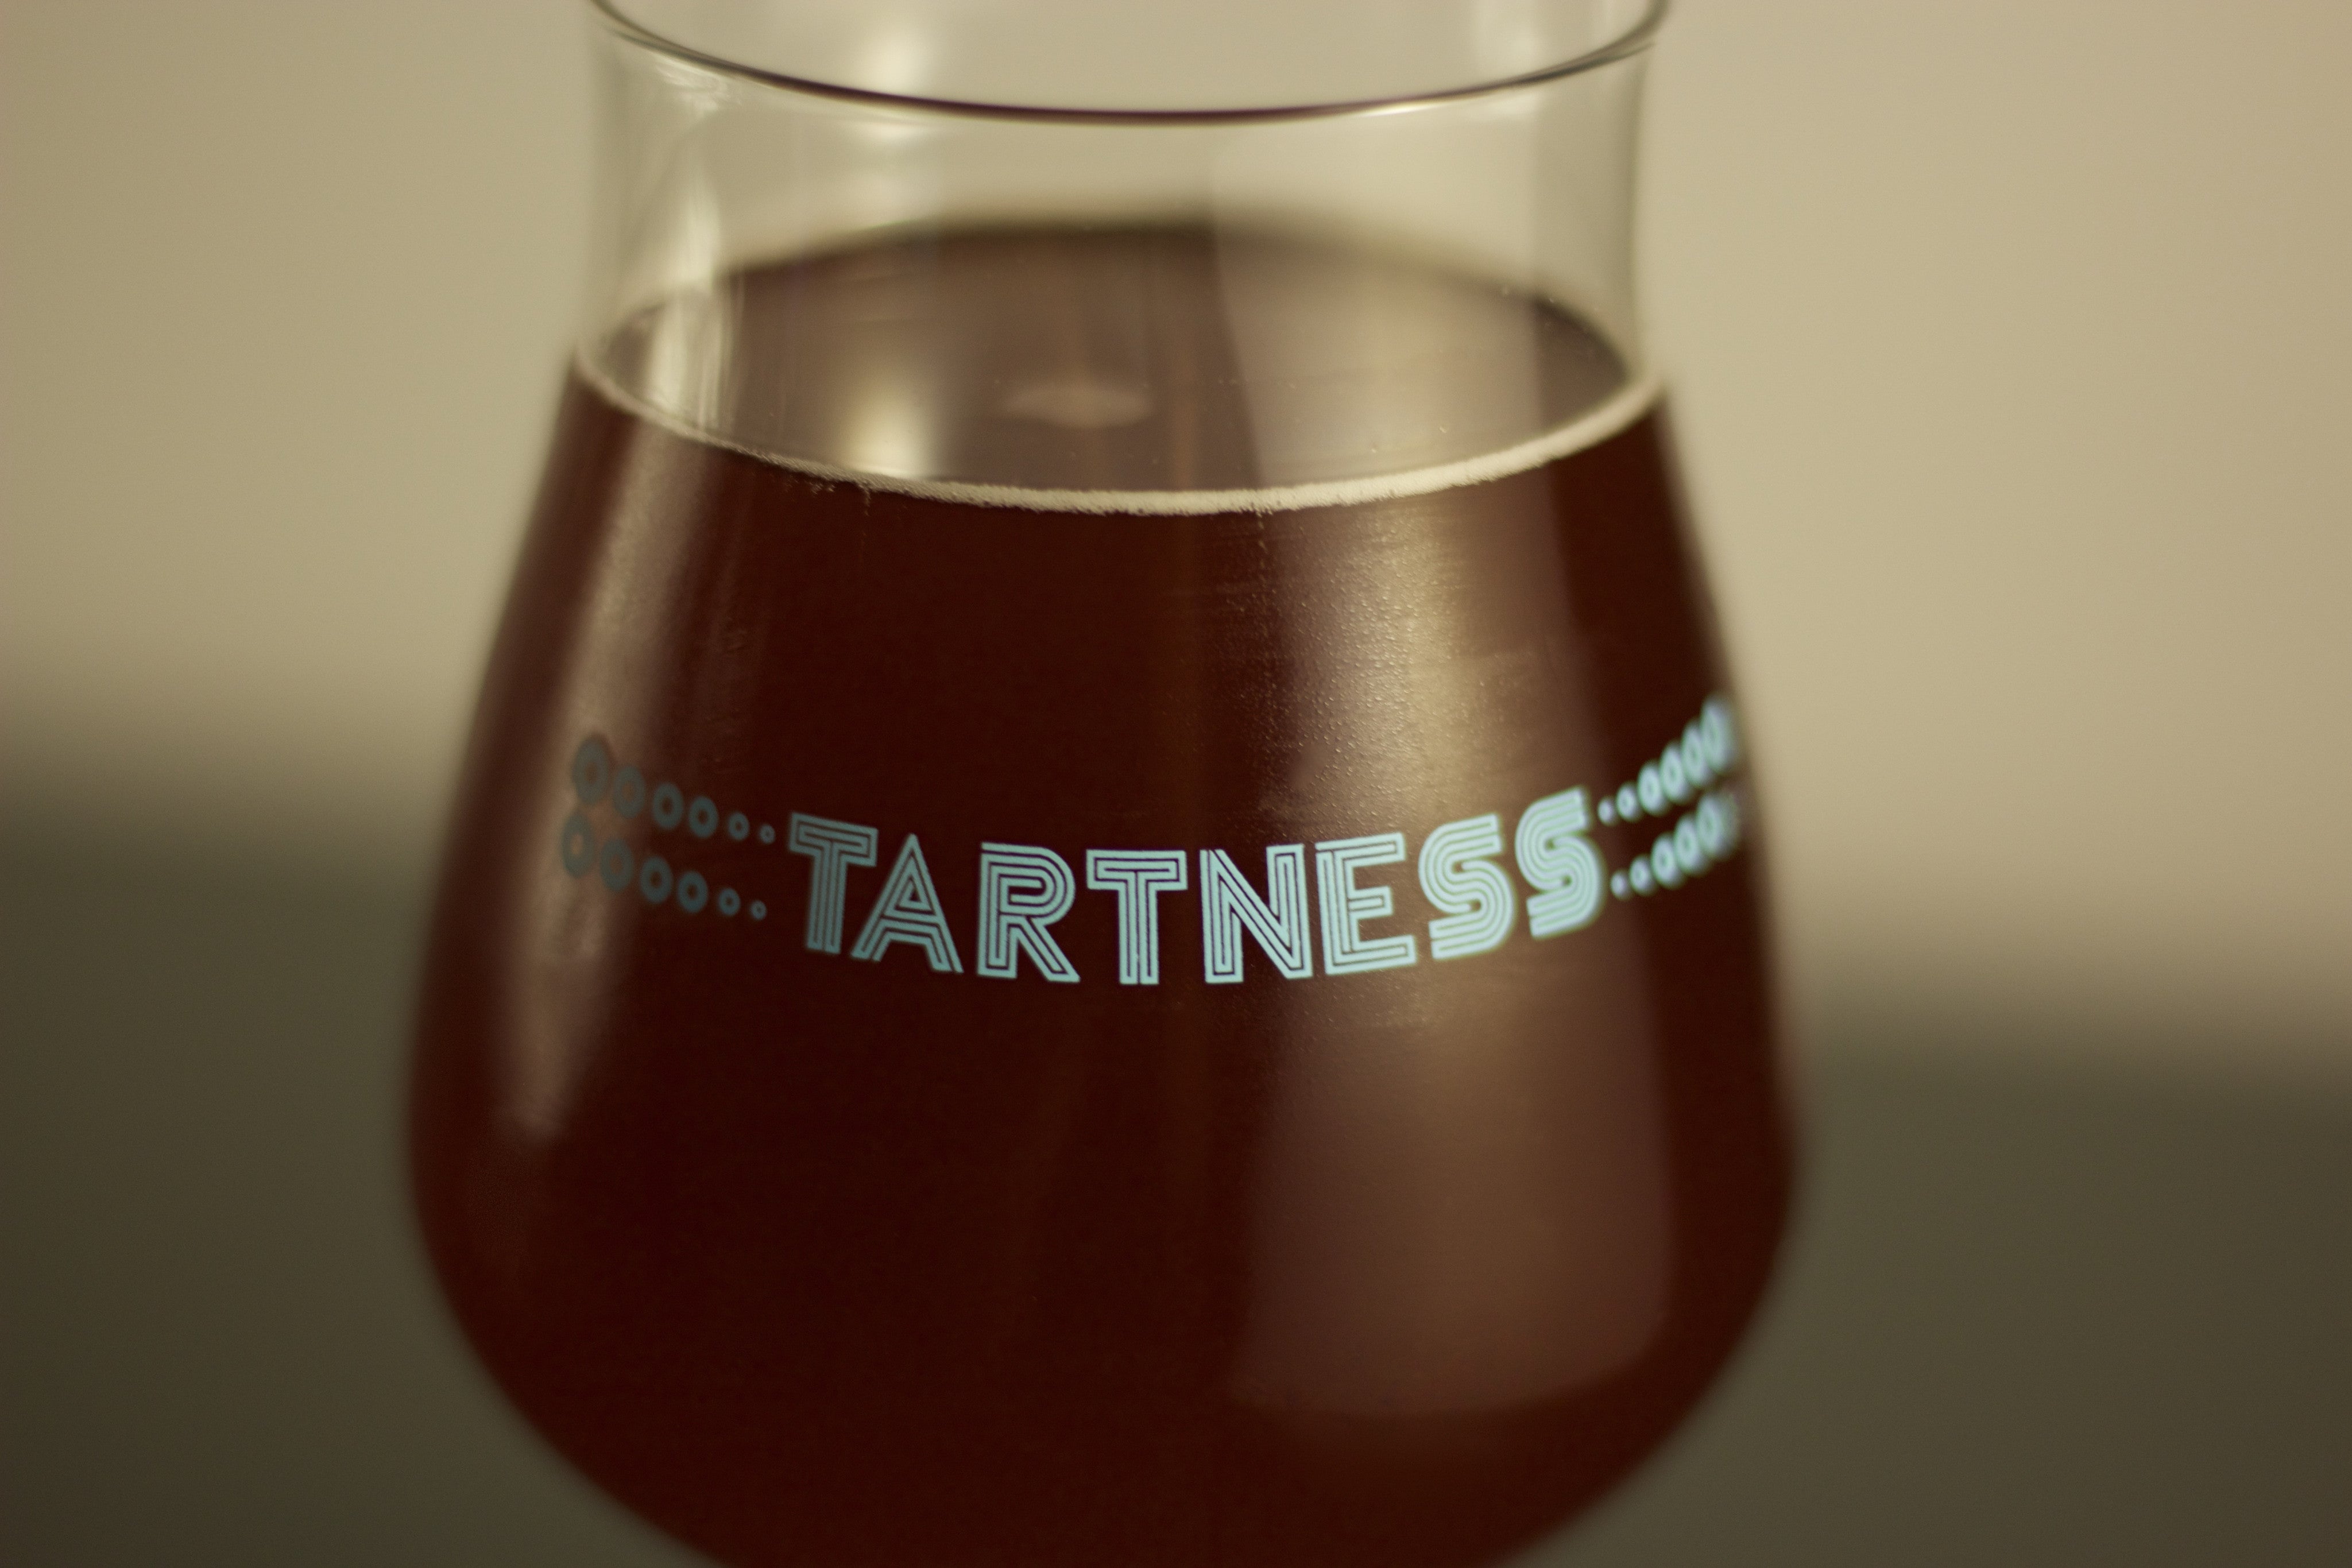 The Tartness Glass